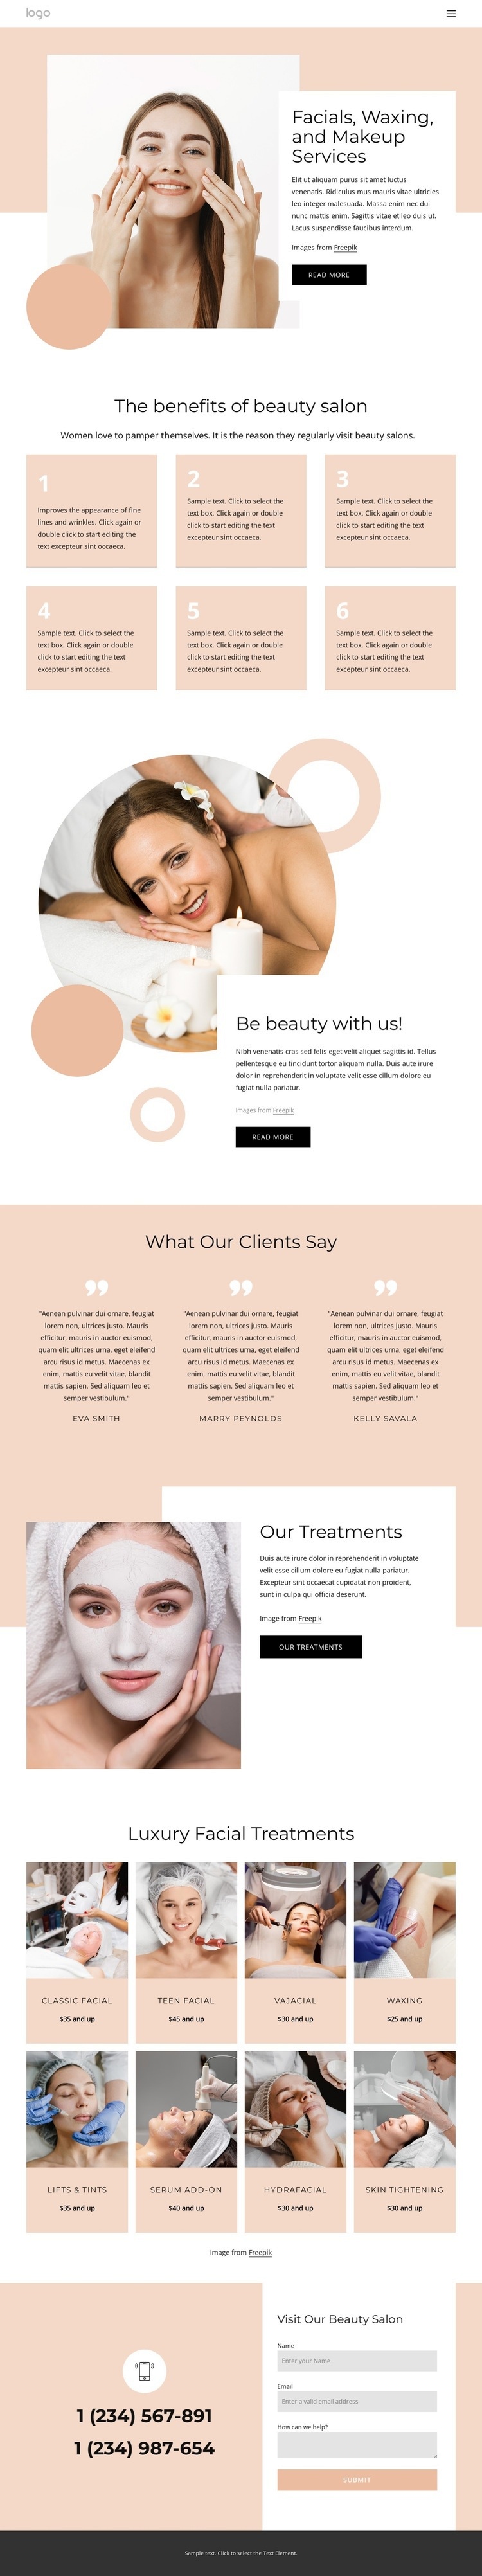 Facials, waxing, makeup services Web Page Design